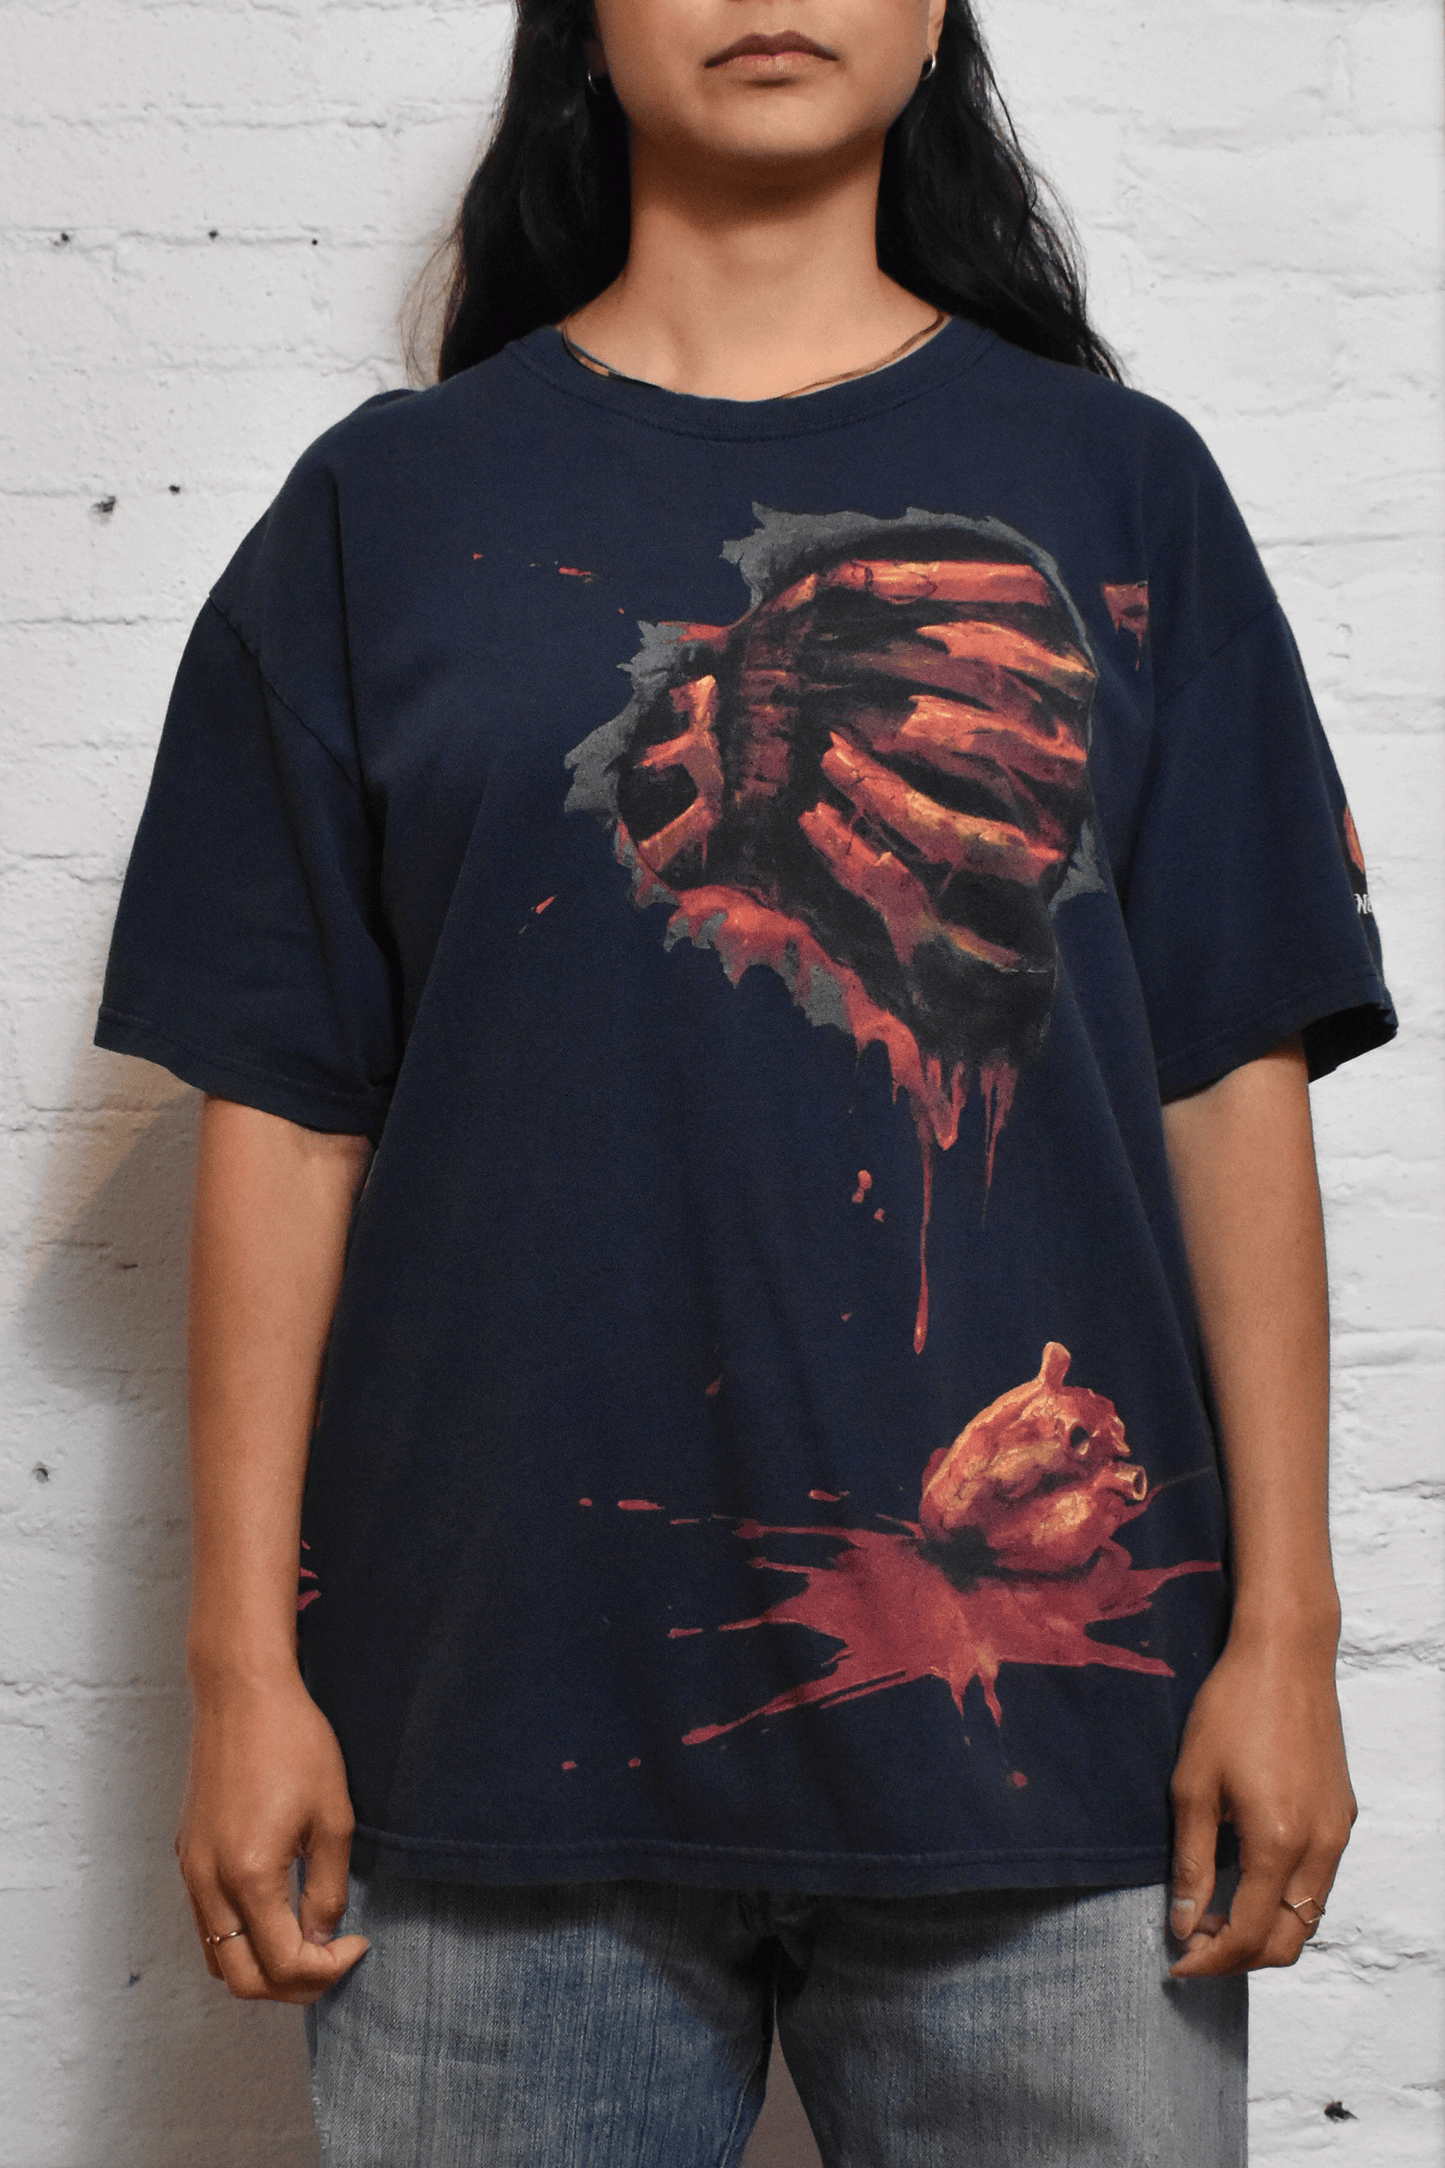 Vintage "Mortal Kombat" Fatality T-shirt